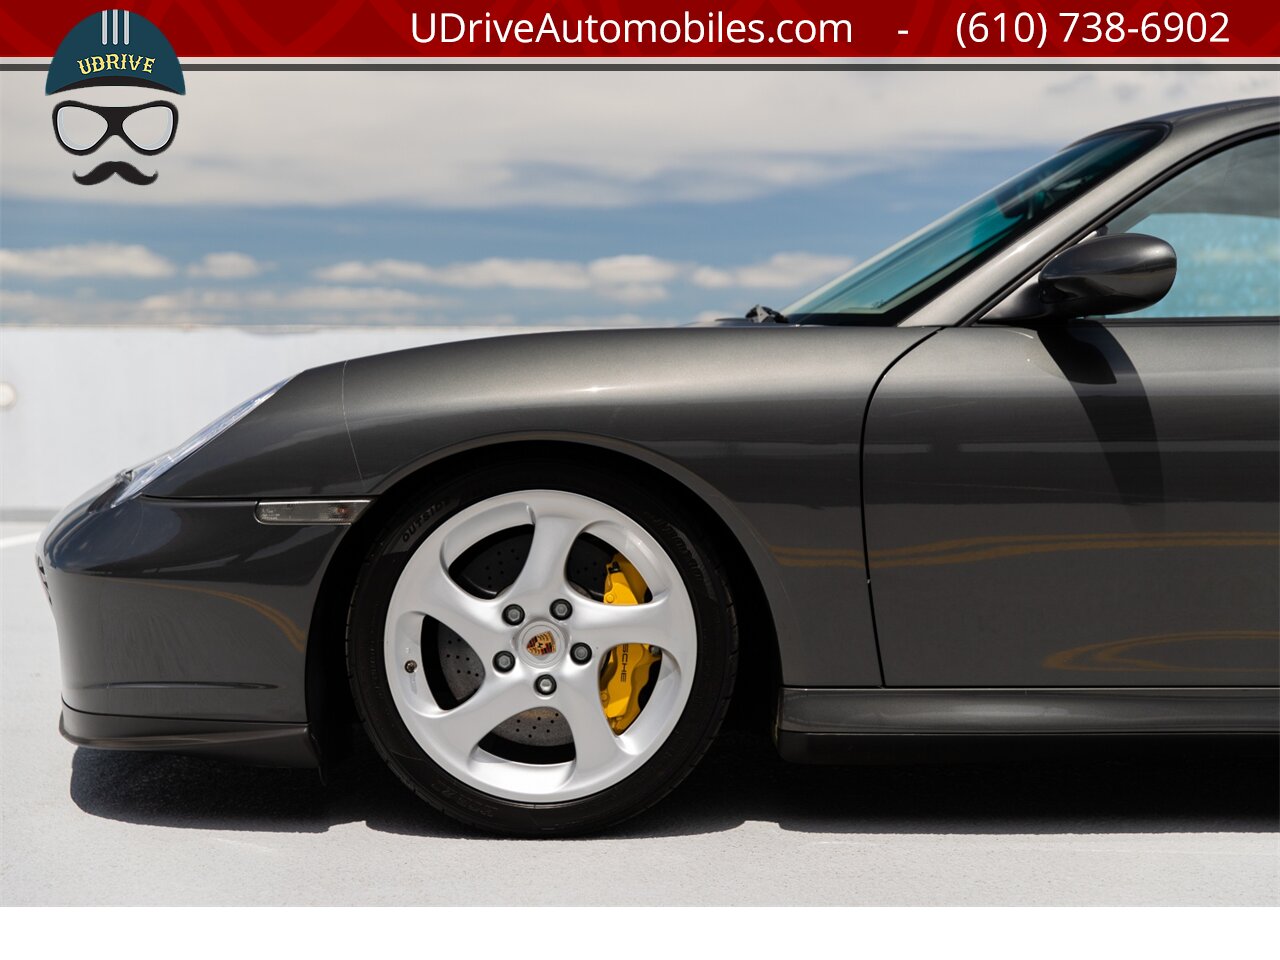 2005 Porsche 911 996 Turbo S Slate Grey Sport Seats Yellow Belts  Sport Shifter Deviating Carpet $139k MSRP - Photo 7 - West Chester, PA 19382